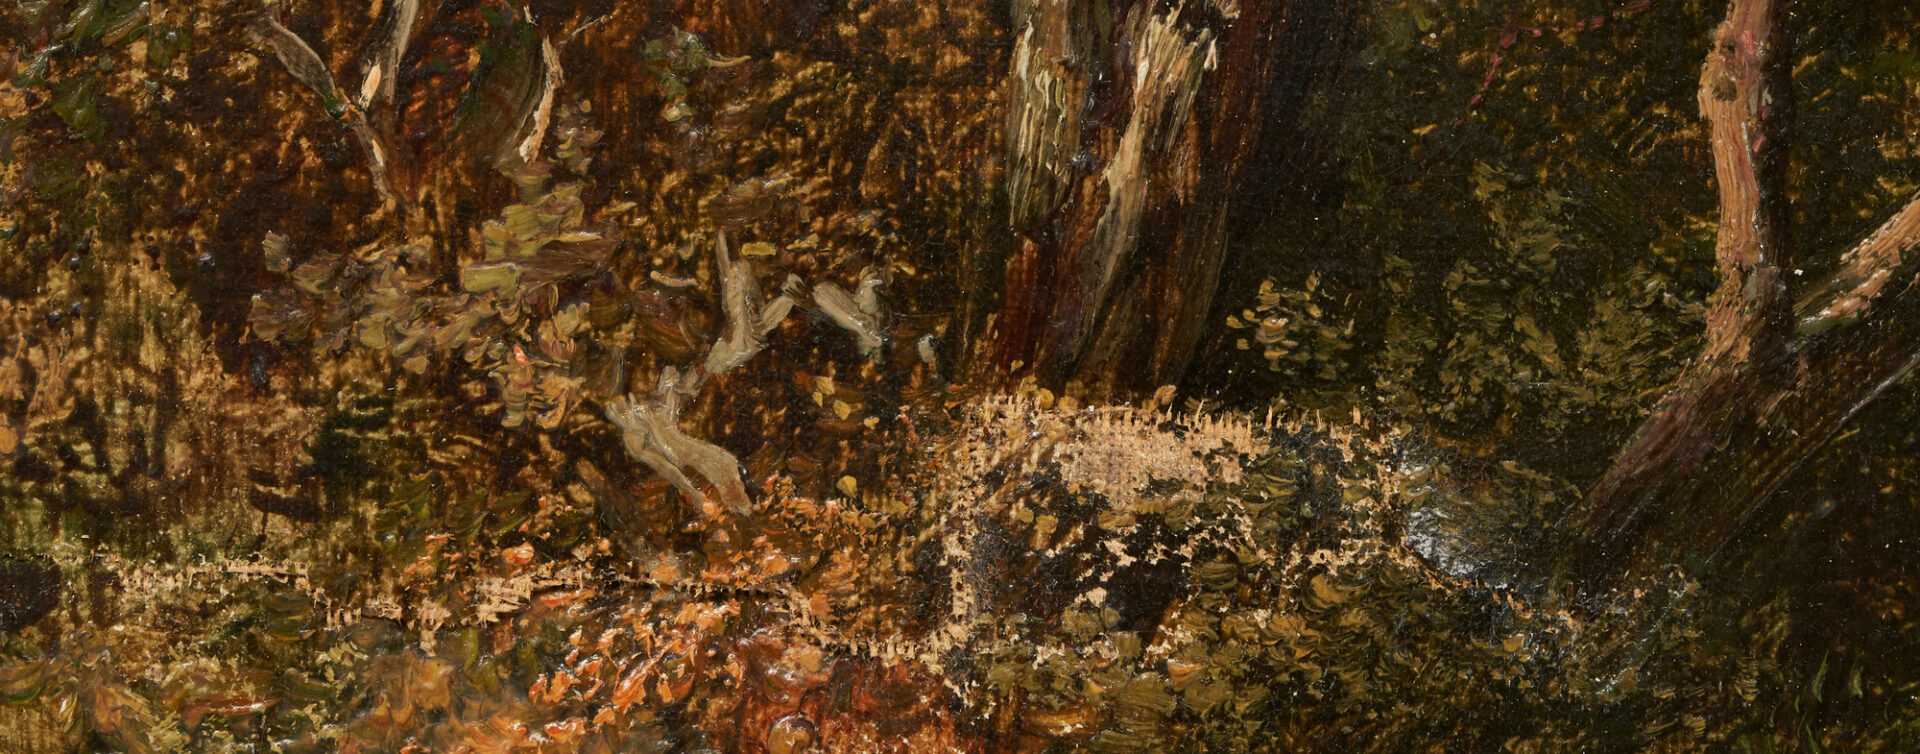 Lot 398: Attr. Hendrik Pieter Koekkoek Oil on Canvas, Forest Path with Figure